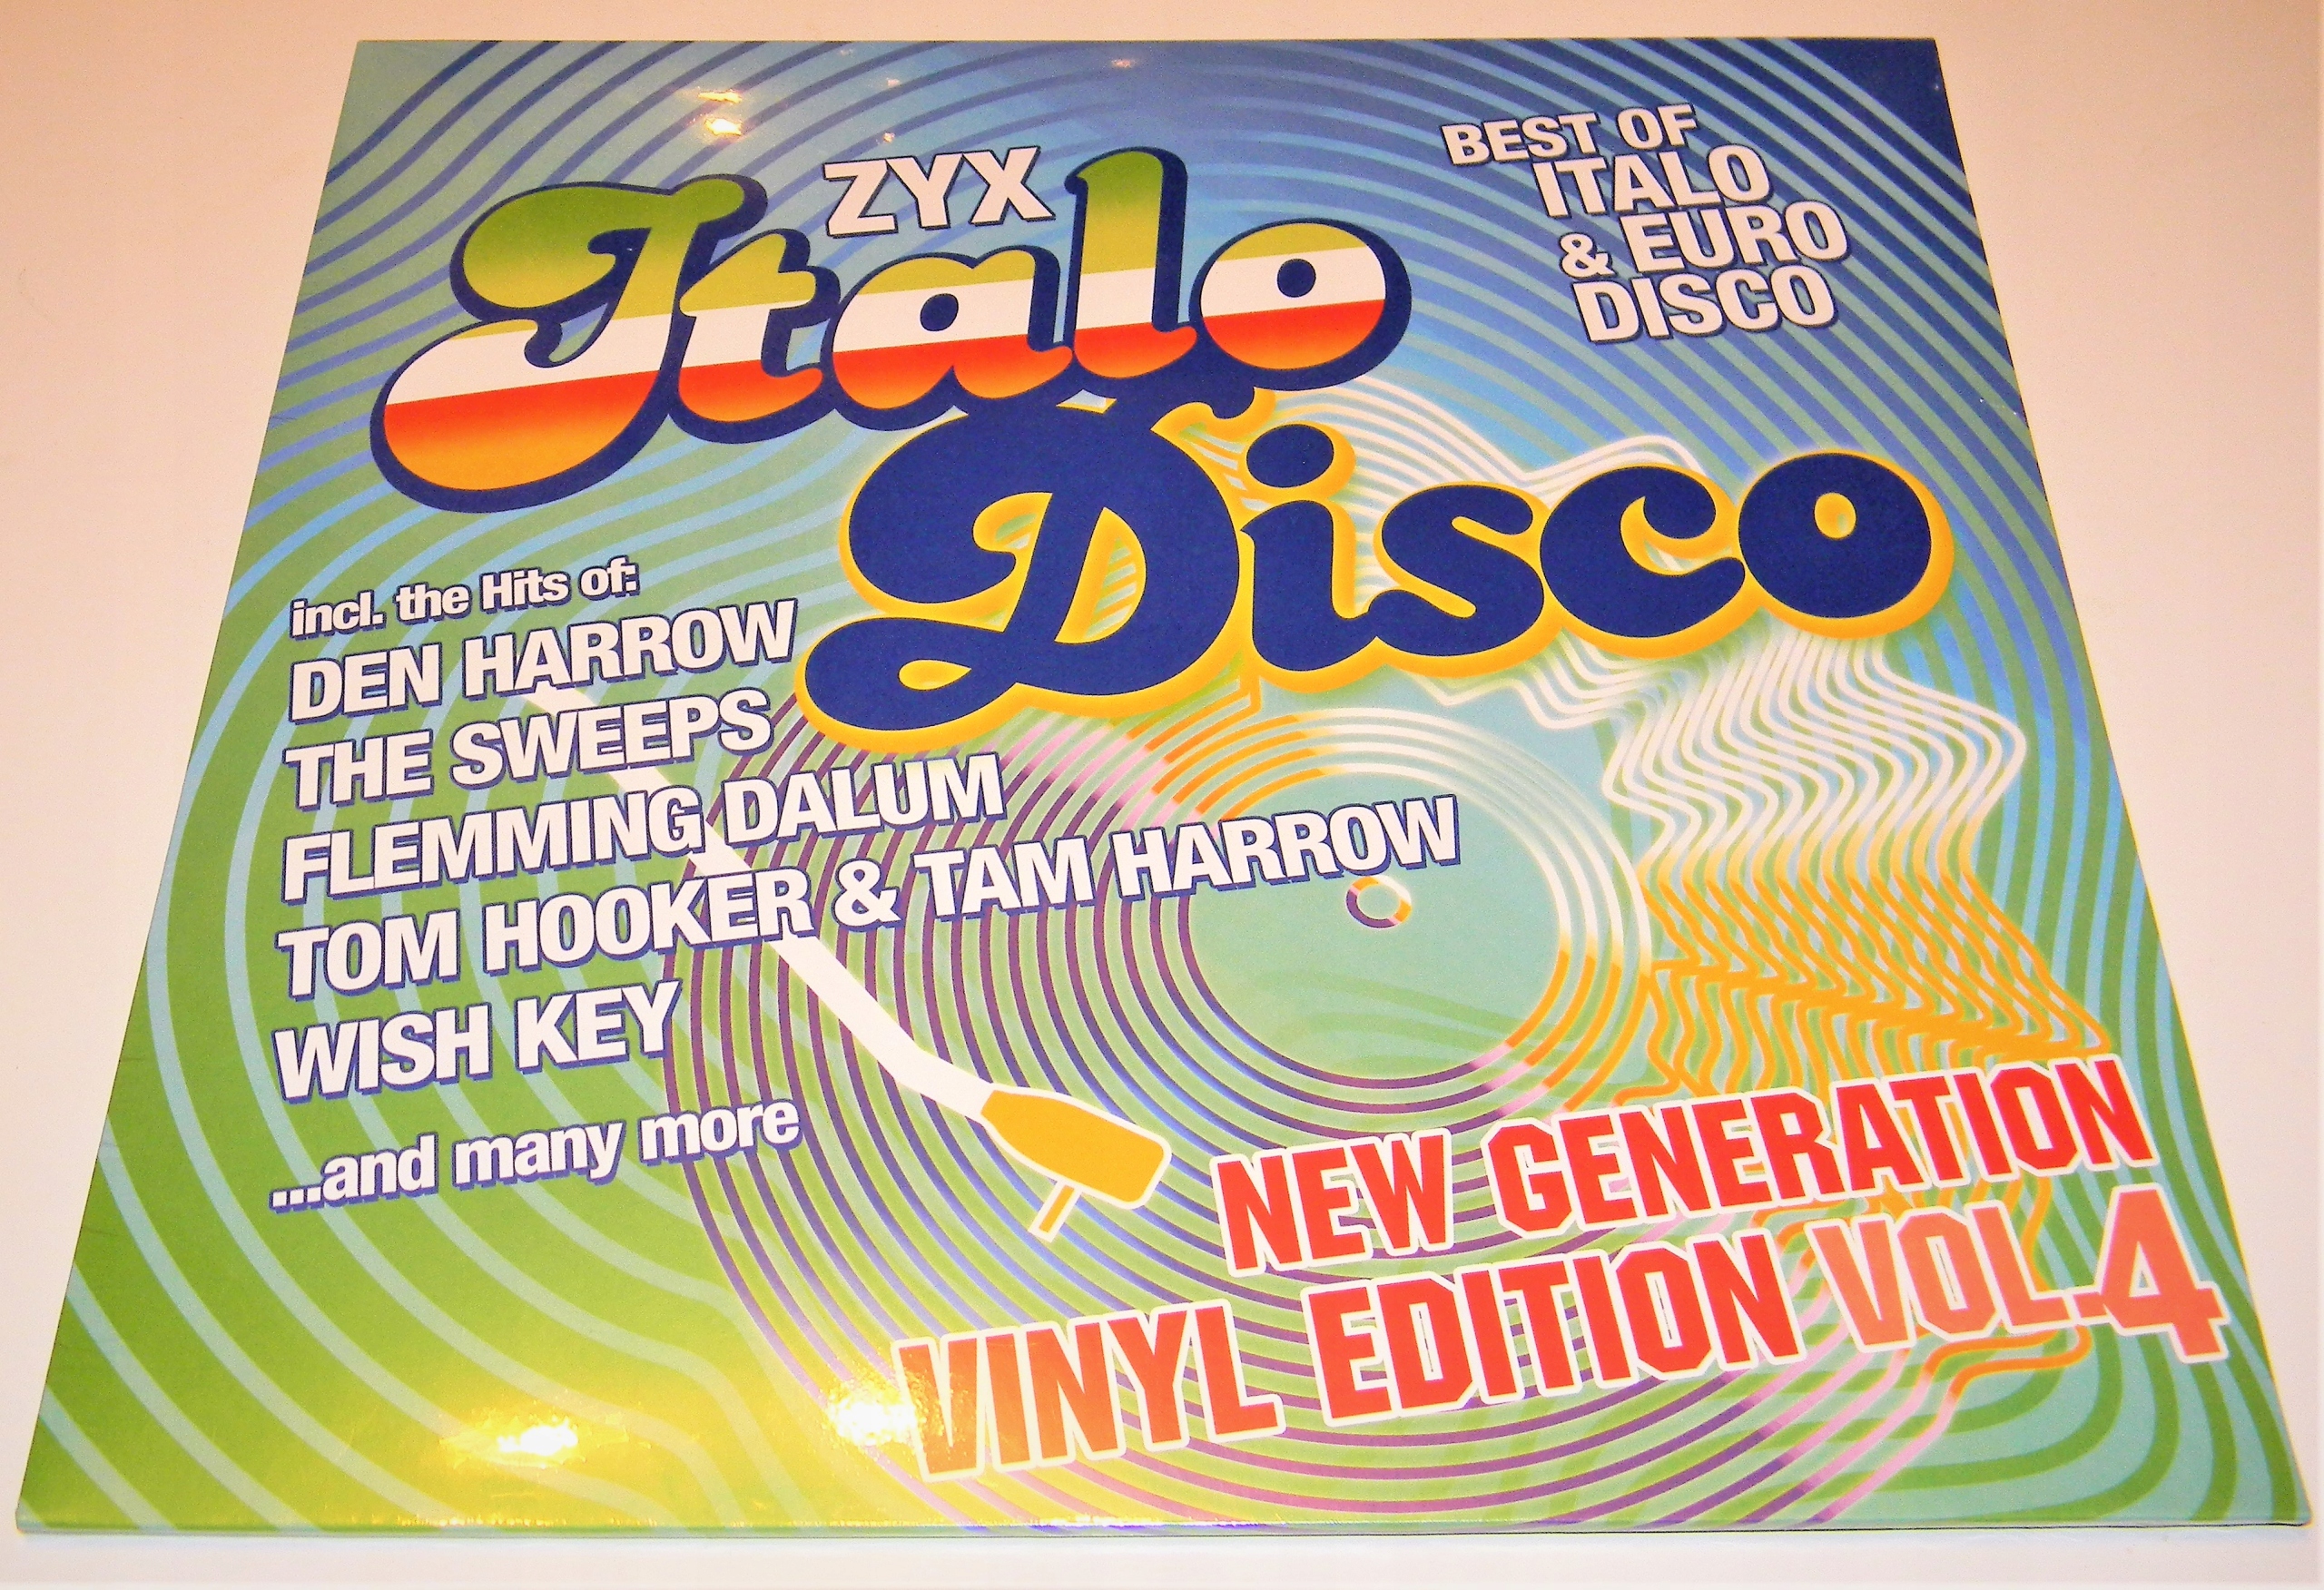 Zyx italo disco new generation 24. ZYX Italo Disco New Generation:Vinyl Edition Vol.2. ZYX Italo Disco New Generation Vinyl Edition Vol.5.